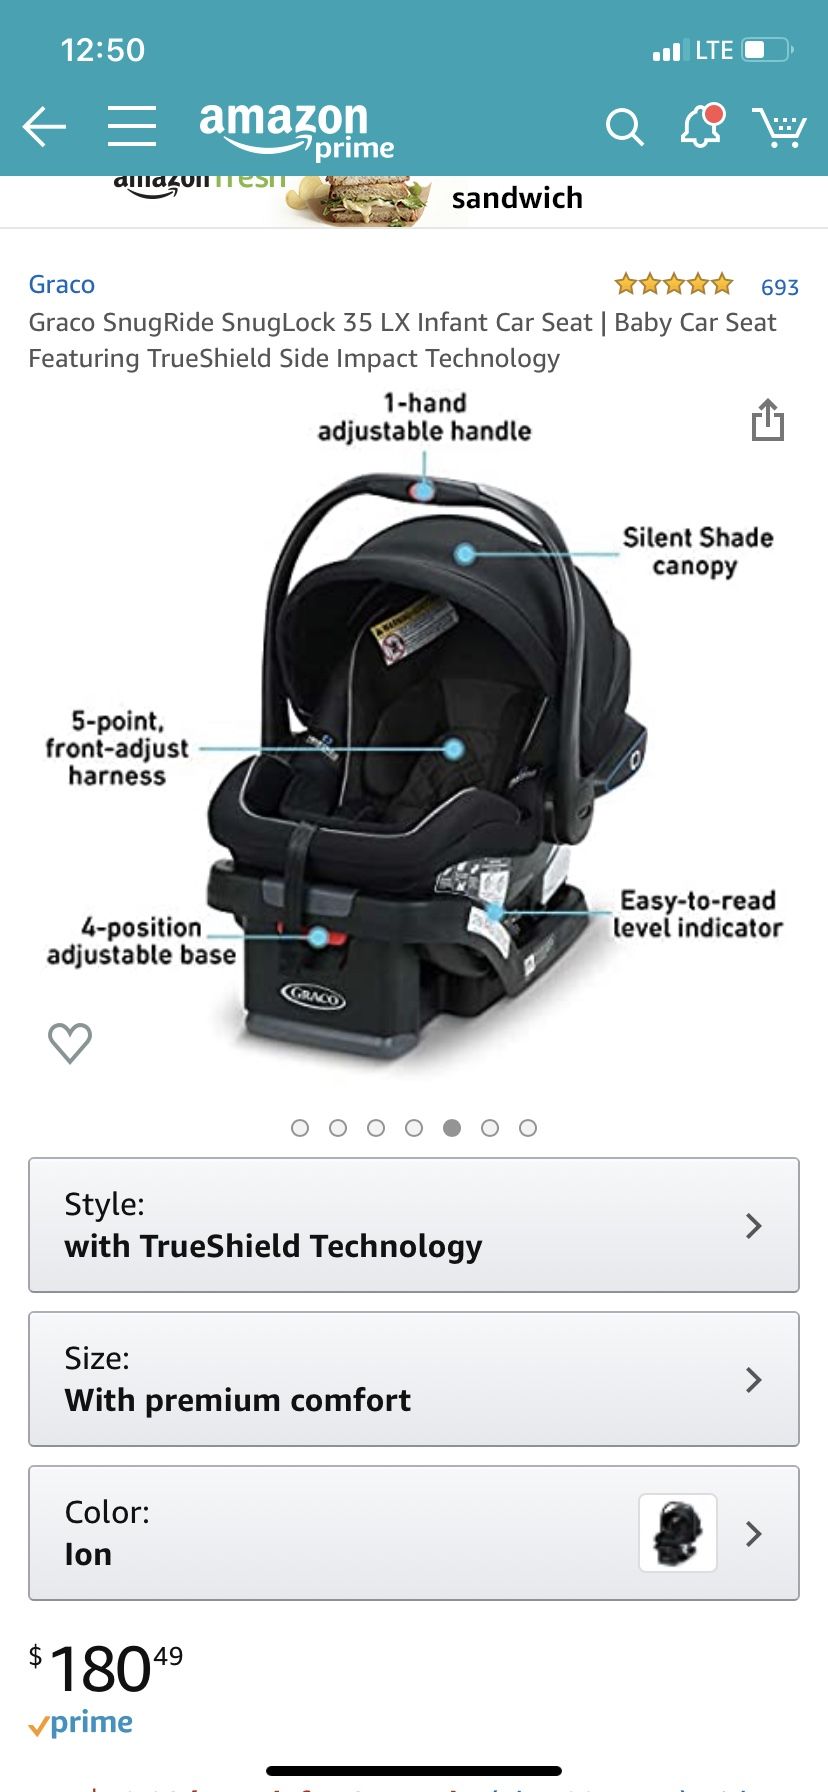 Graco true shield SnugLock Technology Baby Car Seat